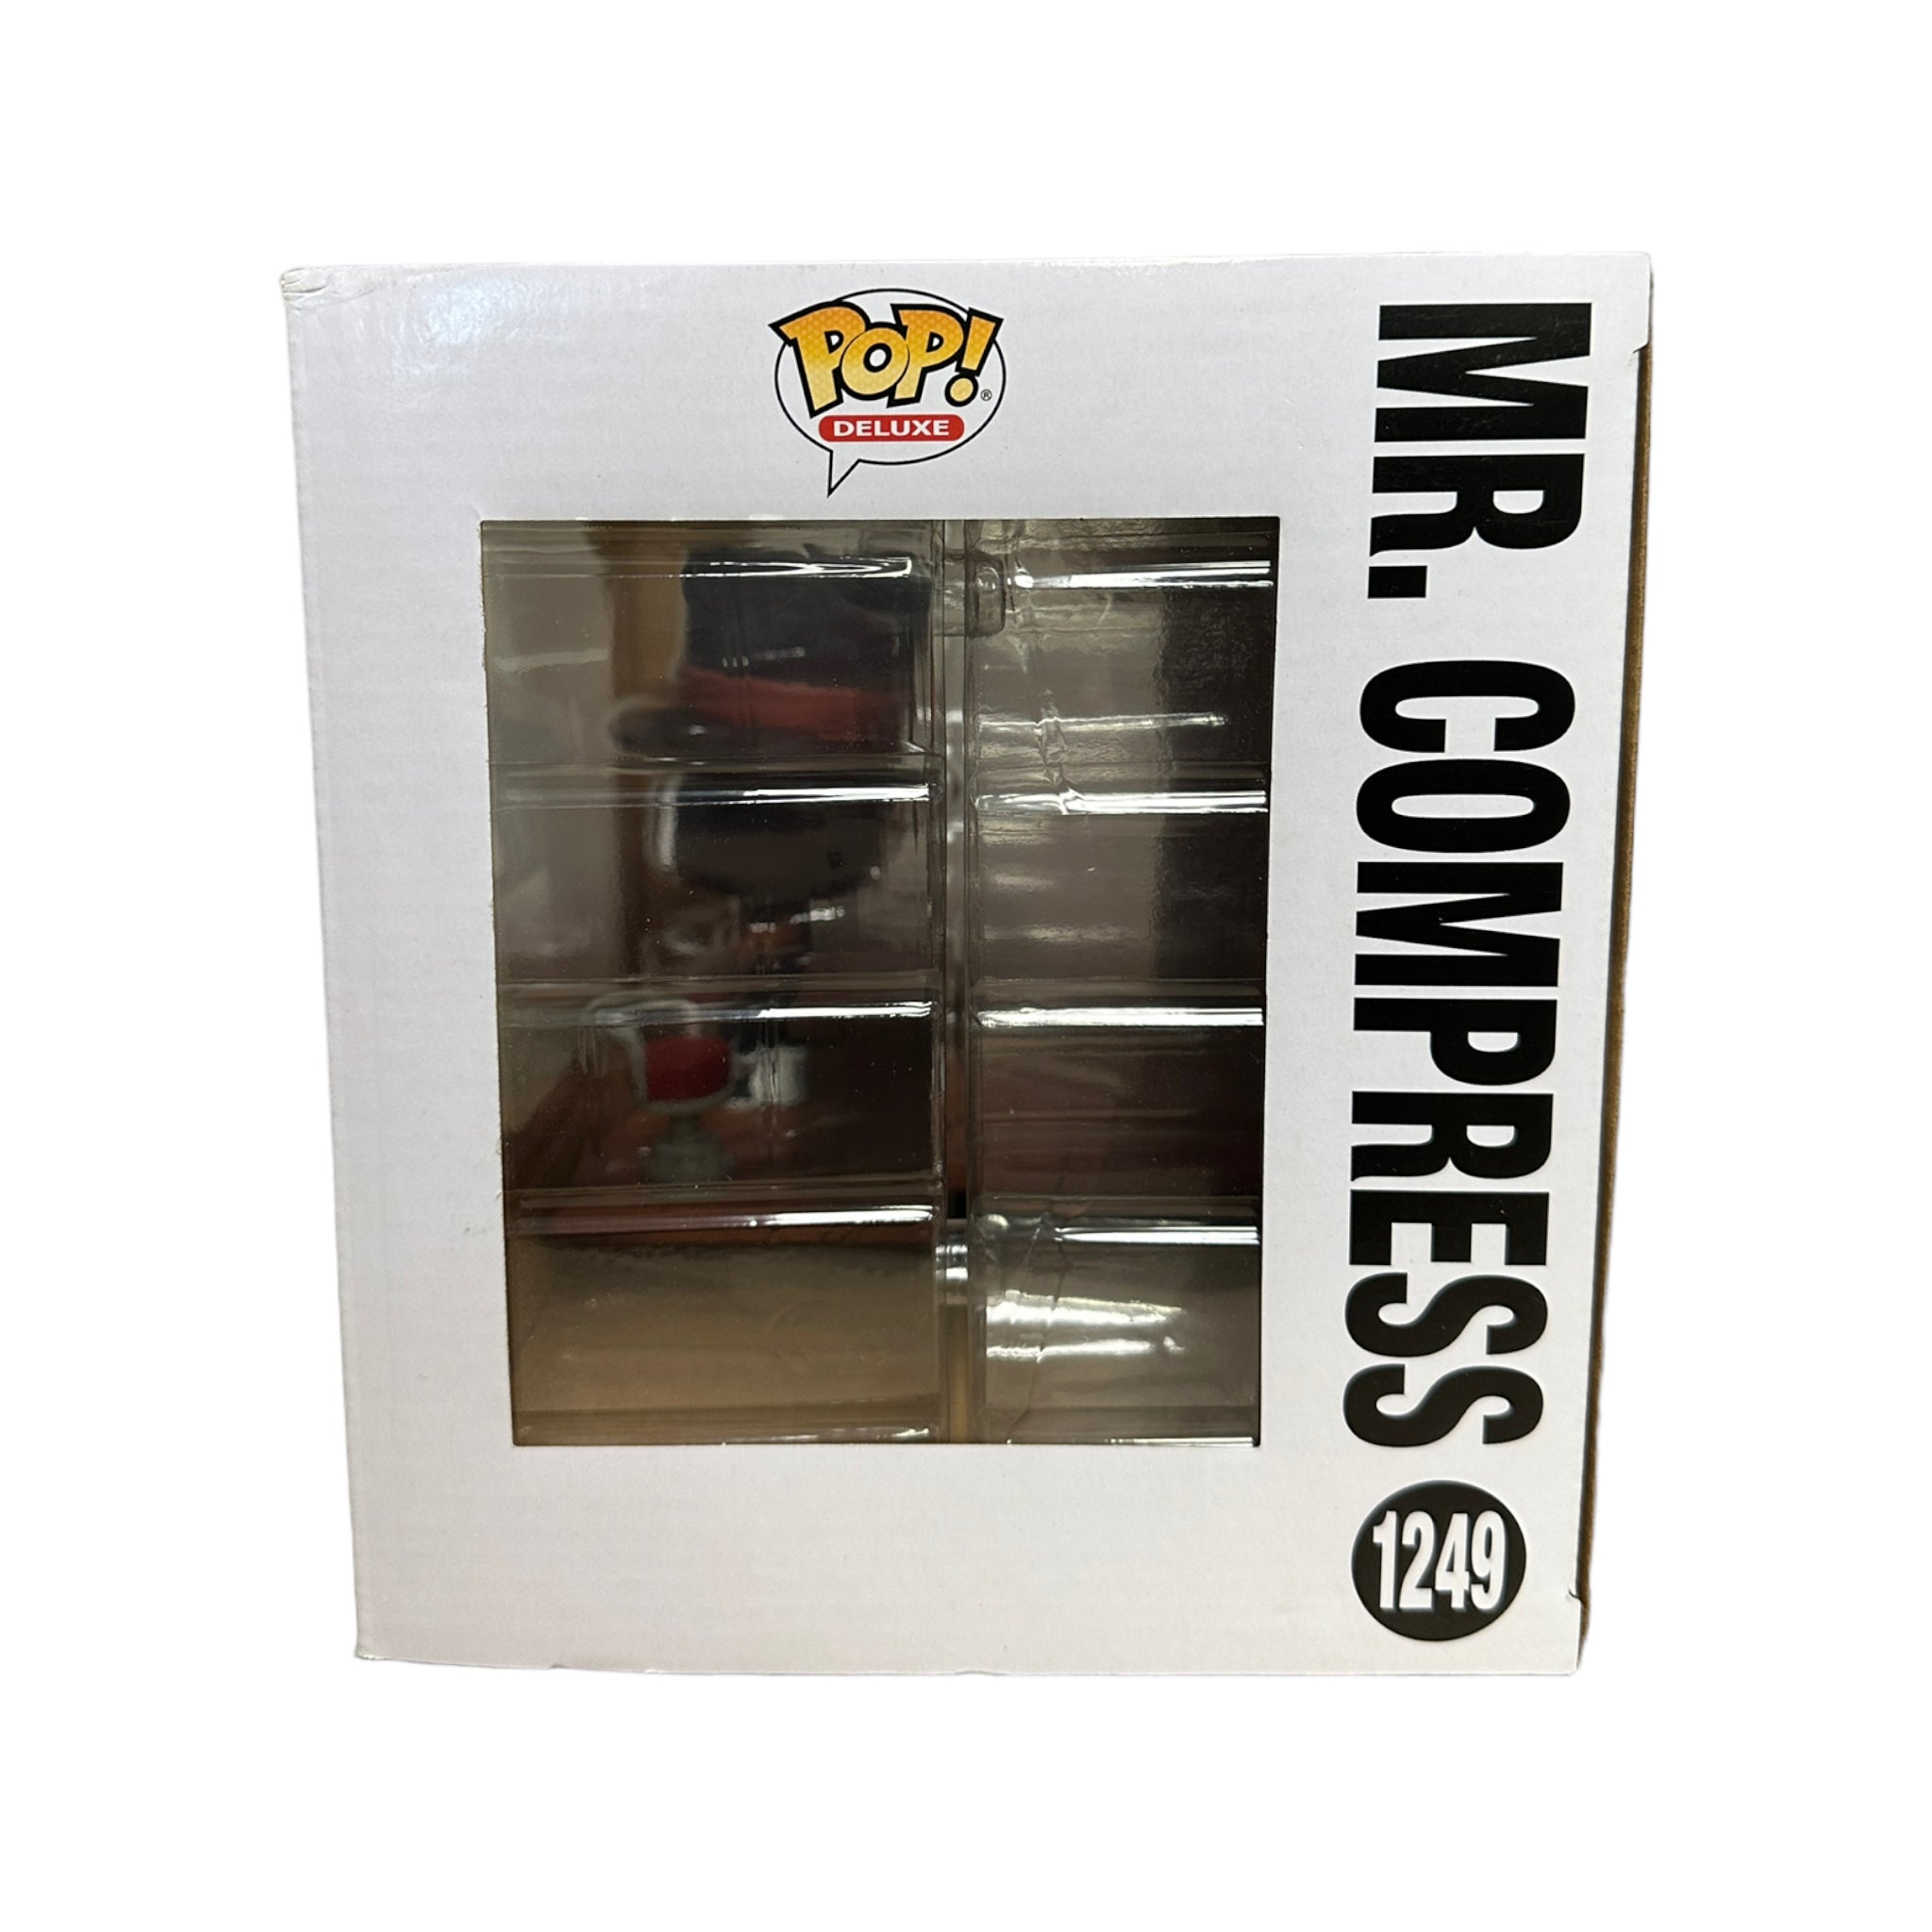 Mr. Compress #1249 Deluxe Funko Pop! - My Hero Academia - Special Edition - Condition 8/10